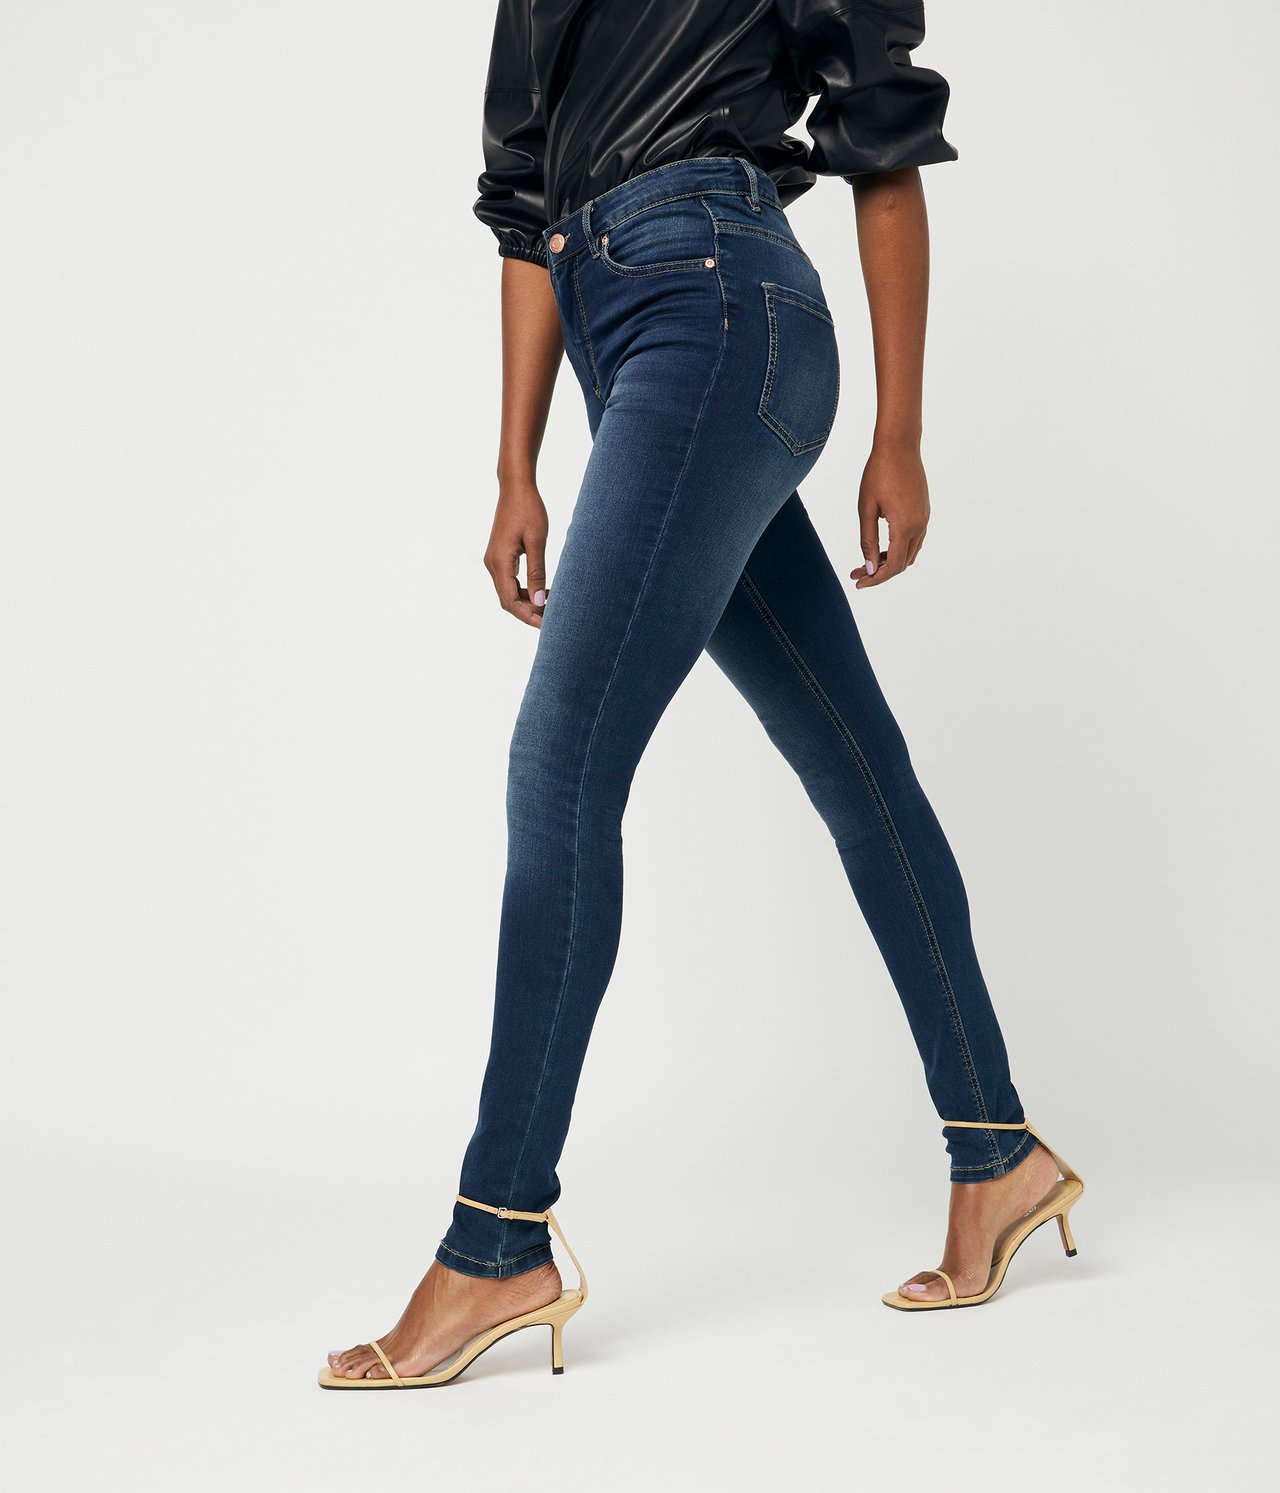 Super slim jeans extra long leg Mörk denim - null - 4